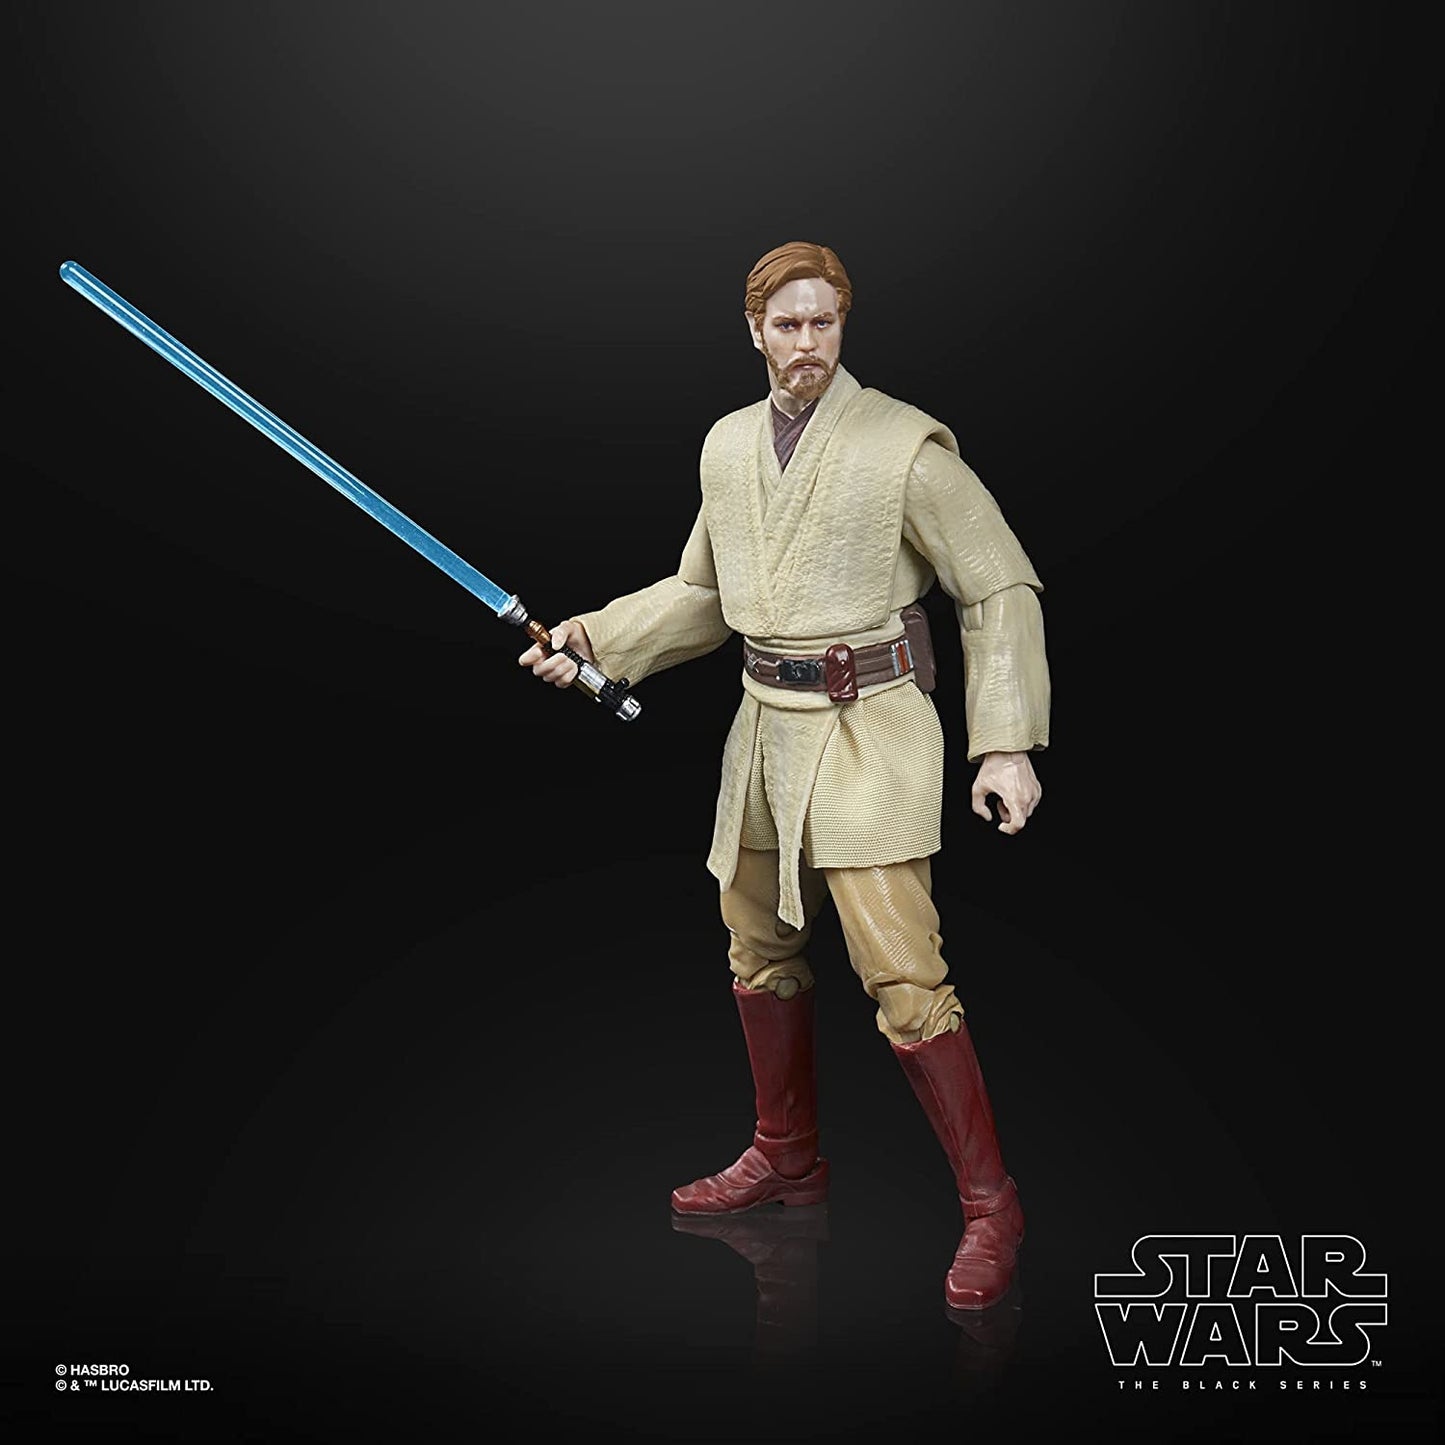 Star Wars Black Archives Obi-Wan Kenobi Episode III 6 Inch Figure